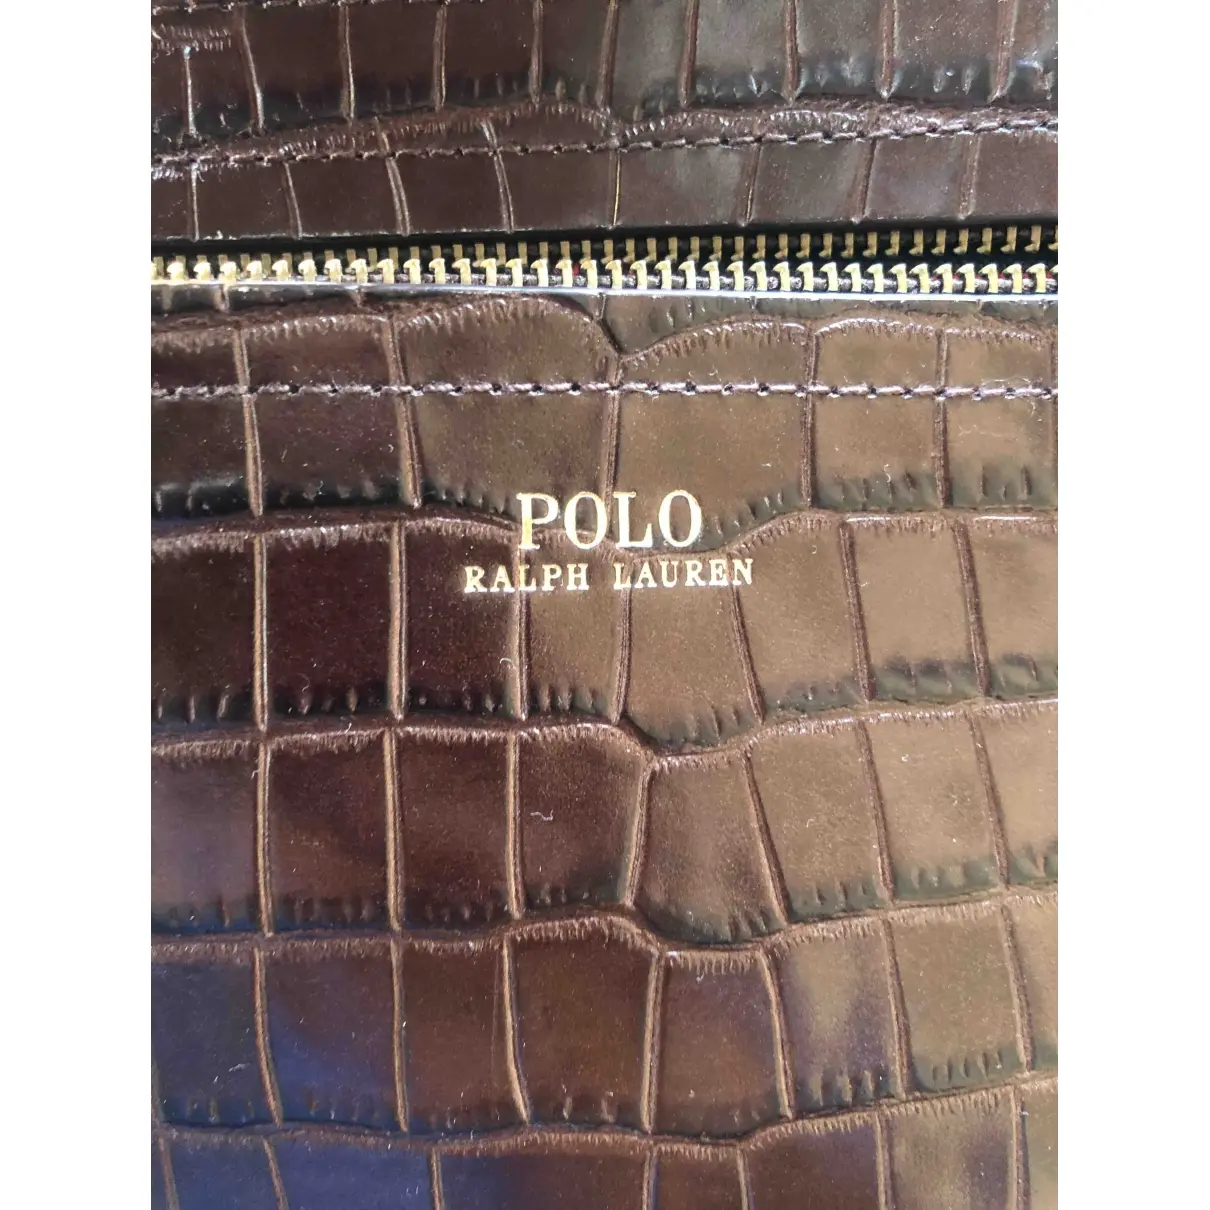 Buy Polo Ralph Lauren Leather purse online